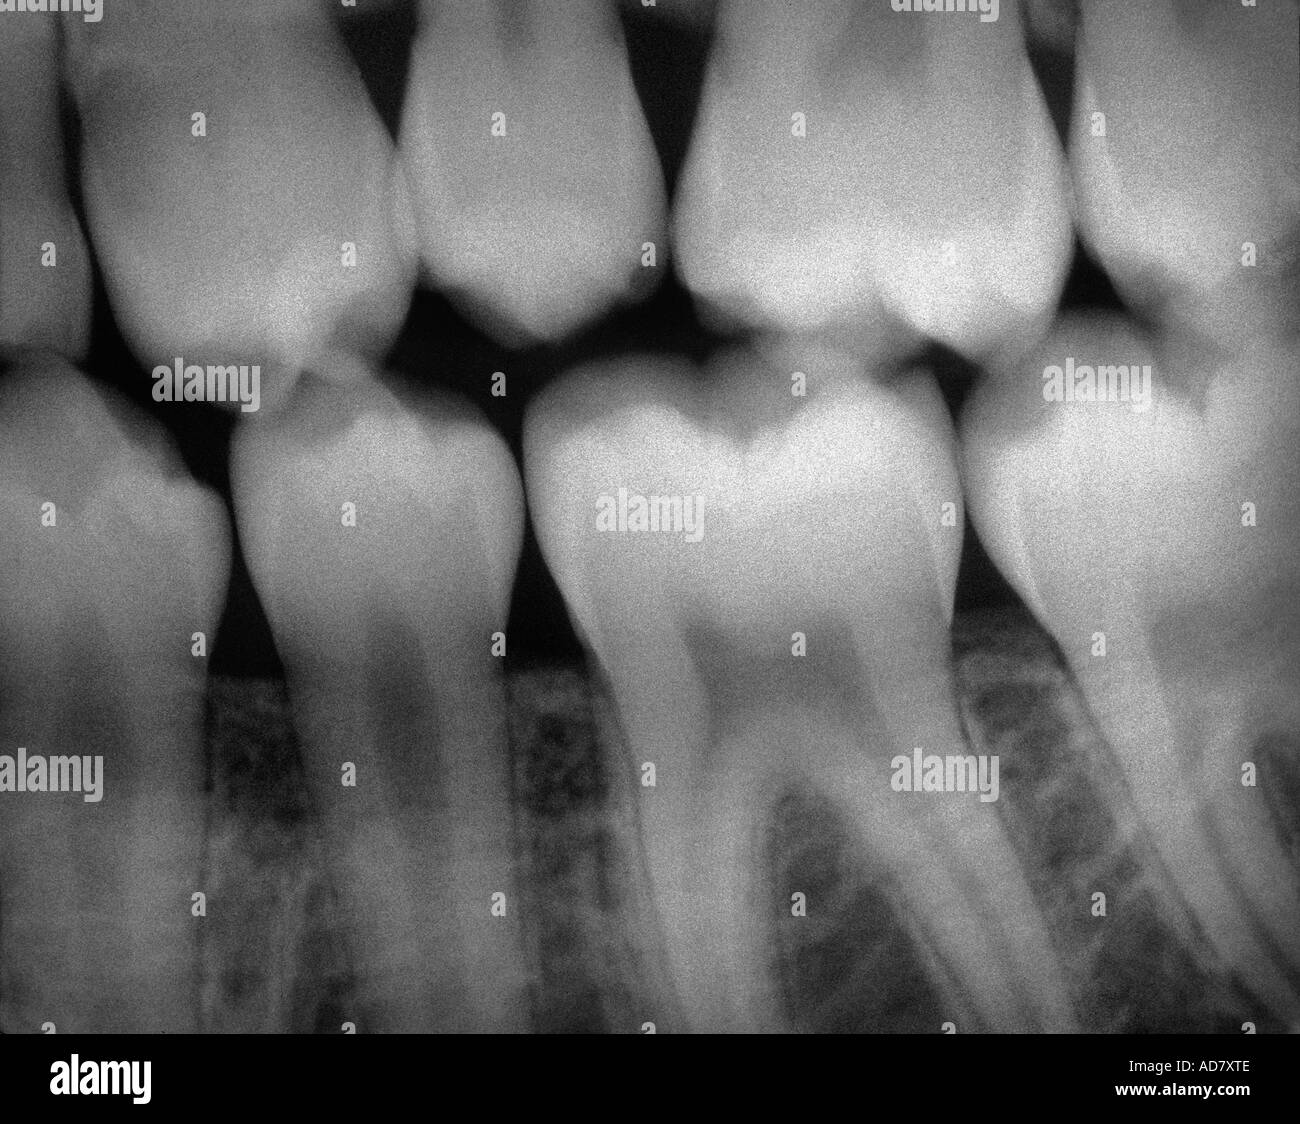 Raggi X dentali Foto Stock